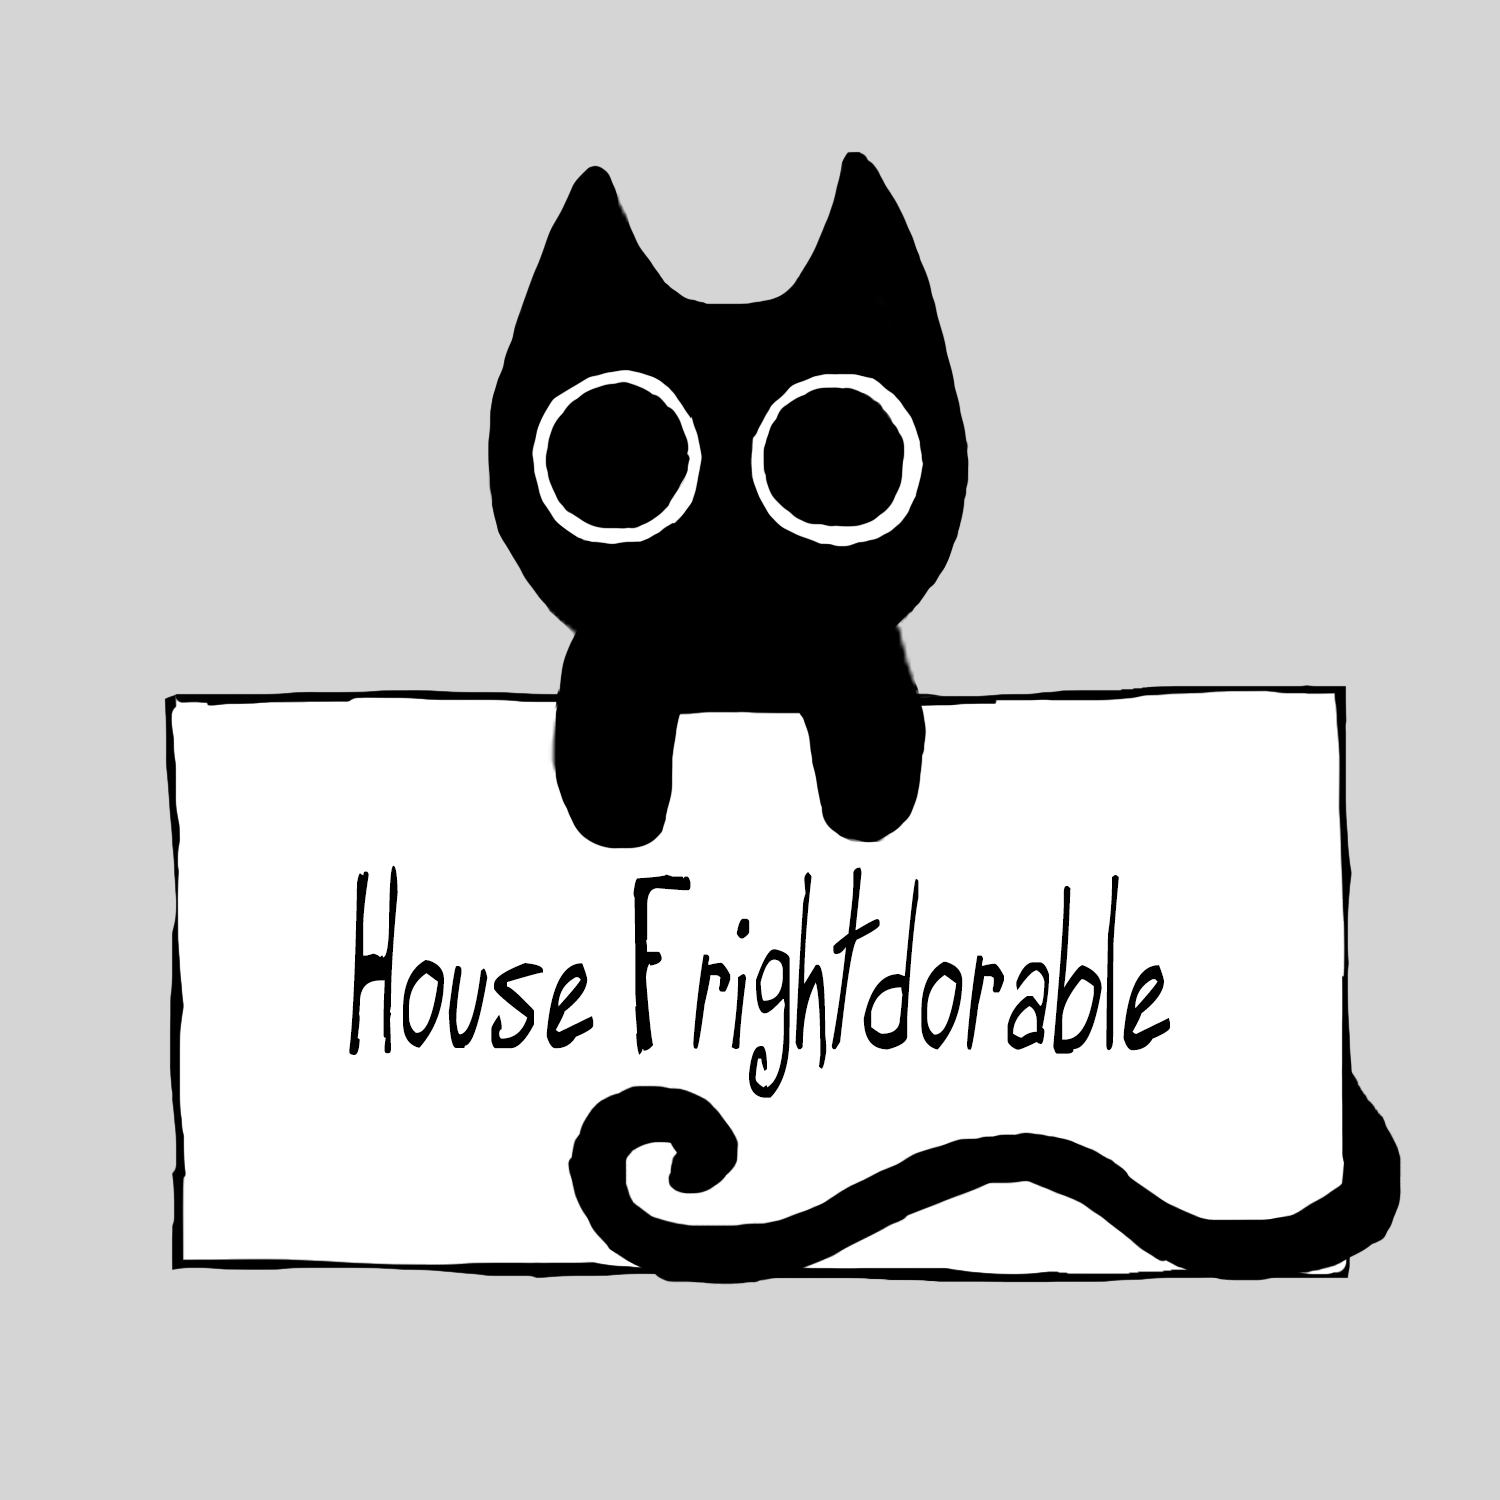 House Frightdorable